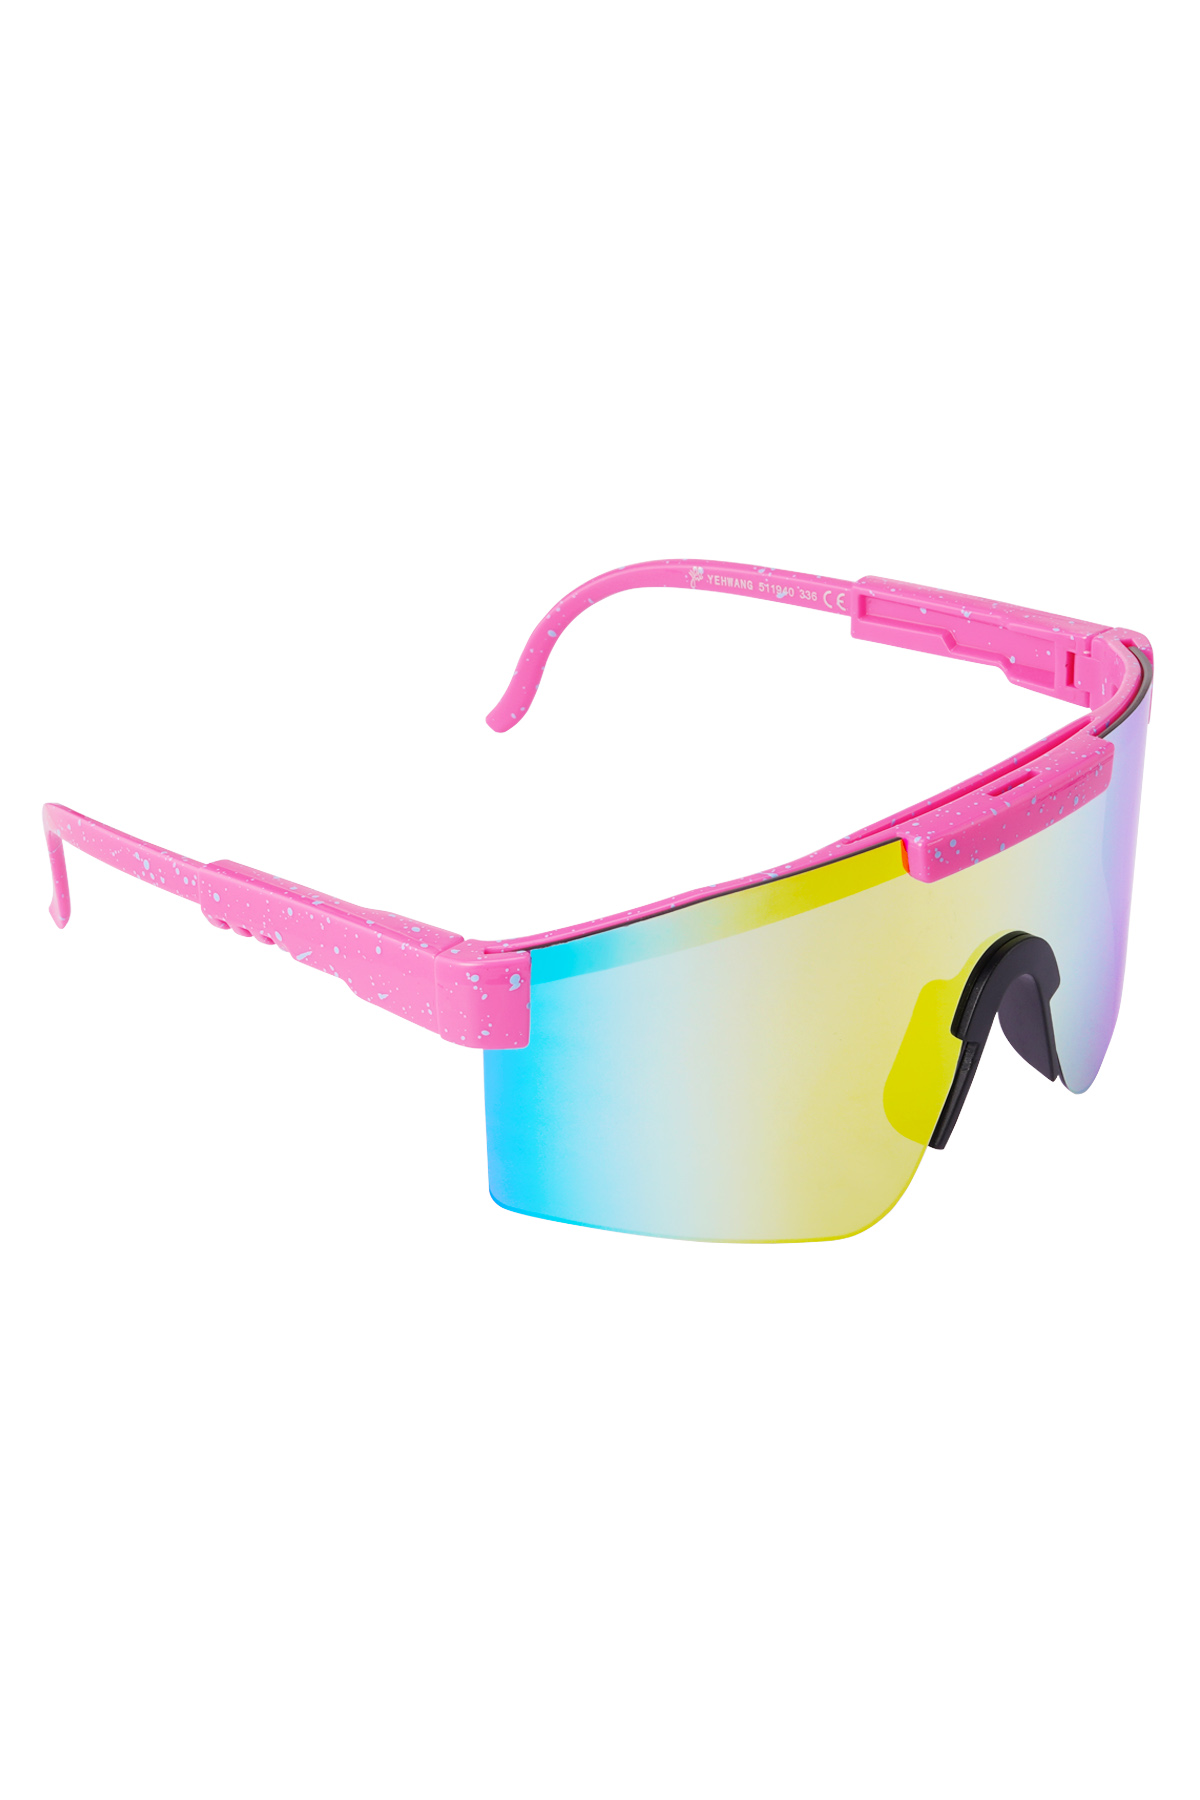 Sunglasses print colored lenses - pink h5 